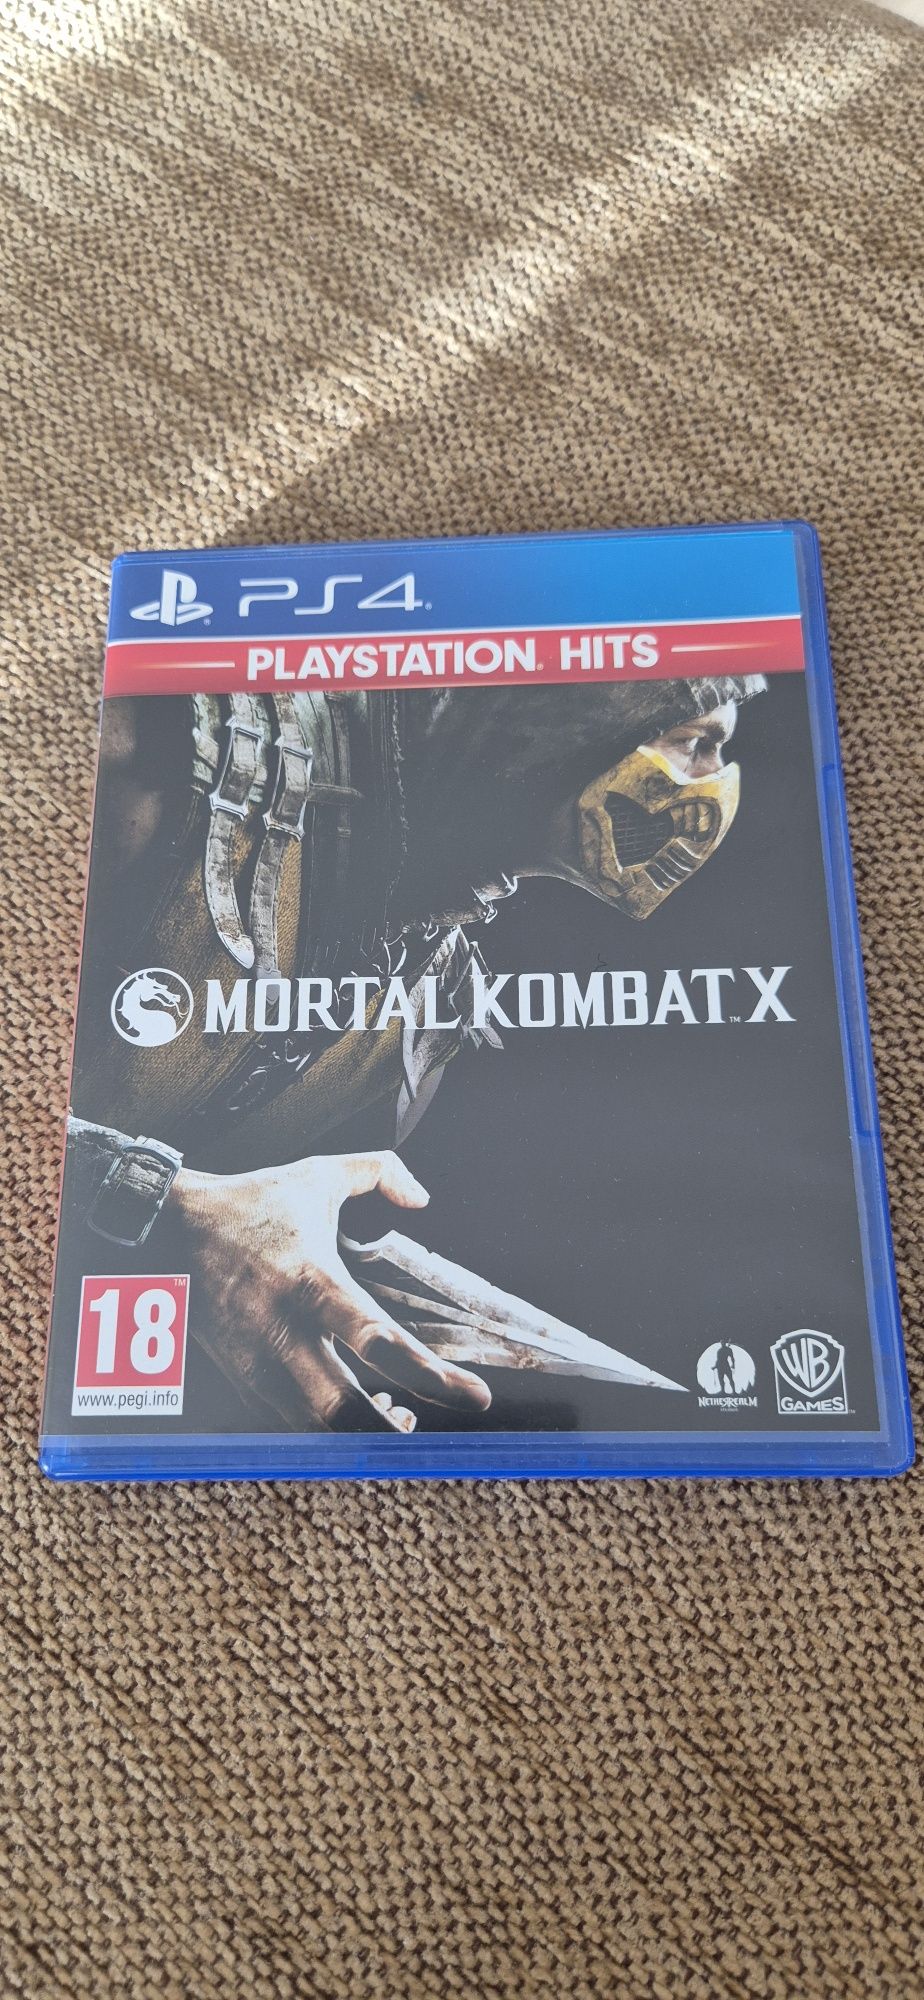 Mortal Kombat X Playstation 4 PS4